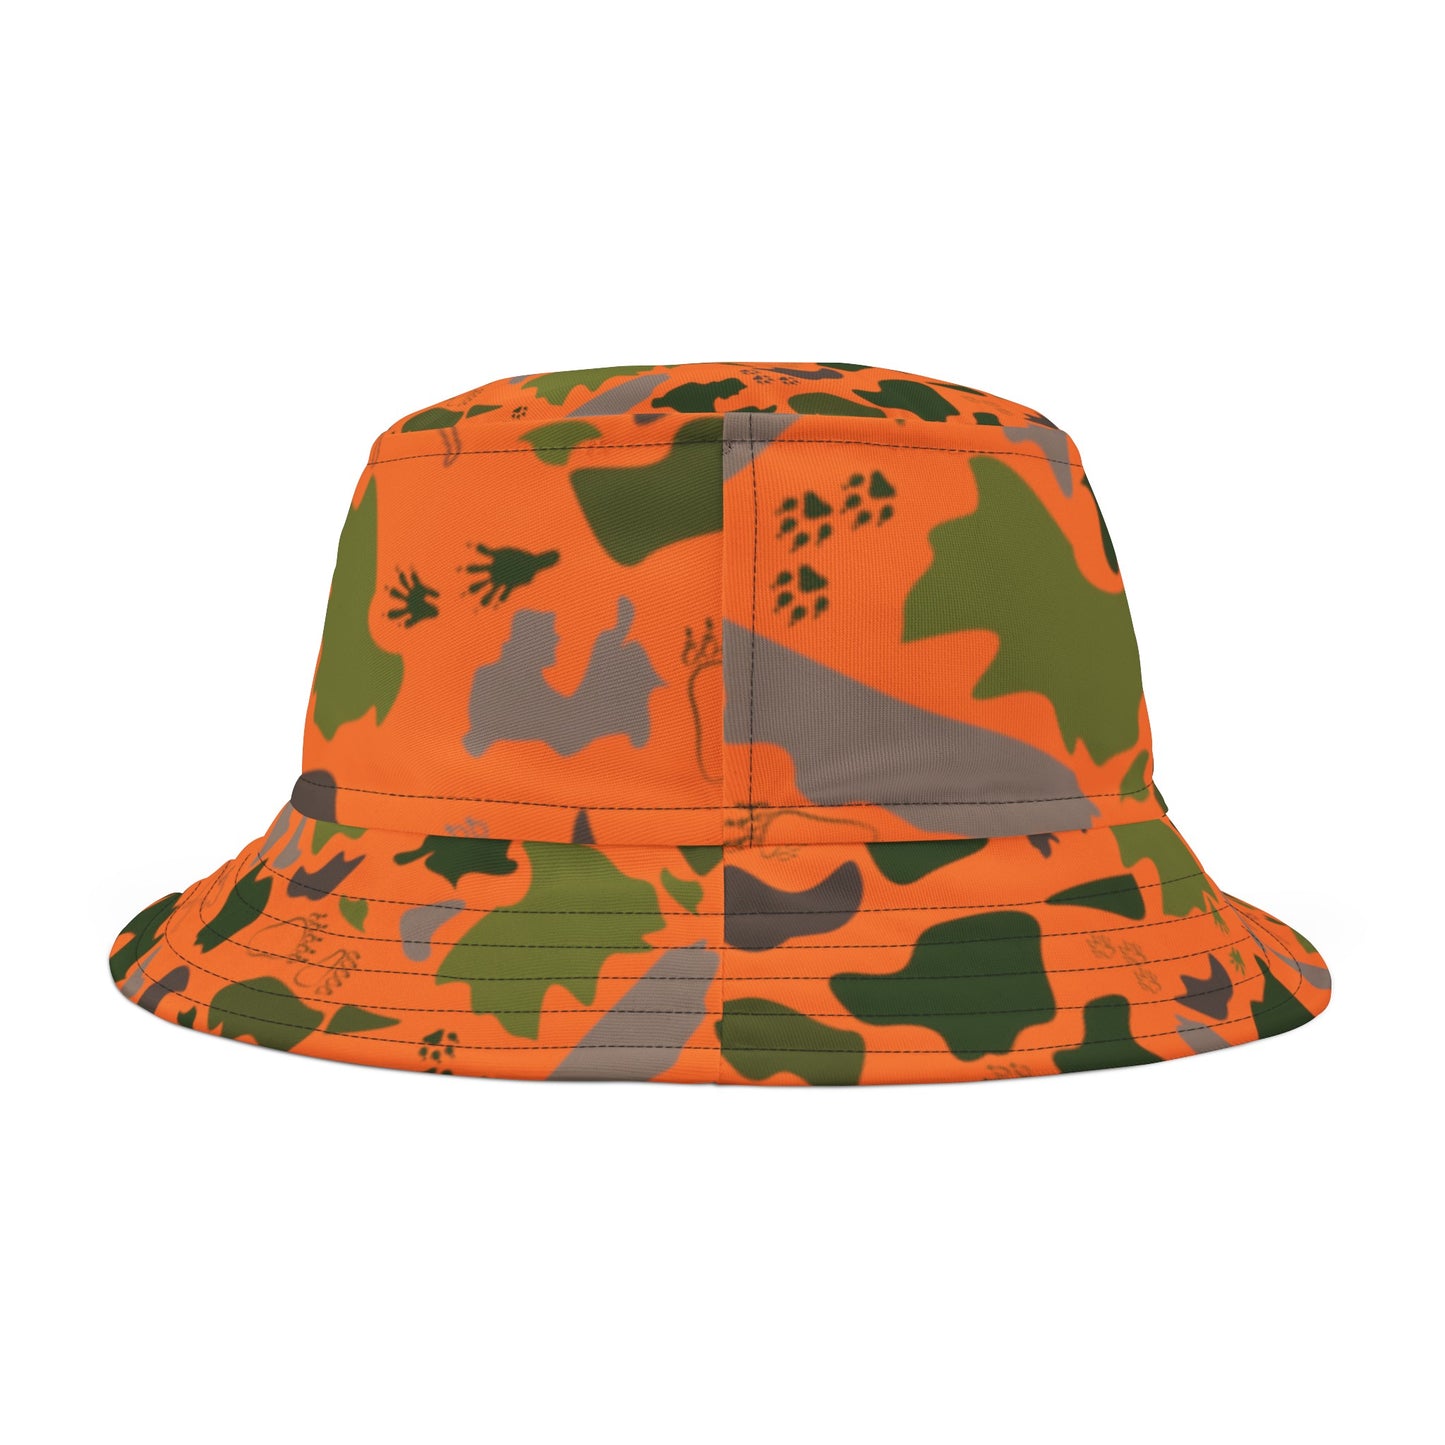 Bucket camouflage hat 